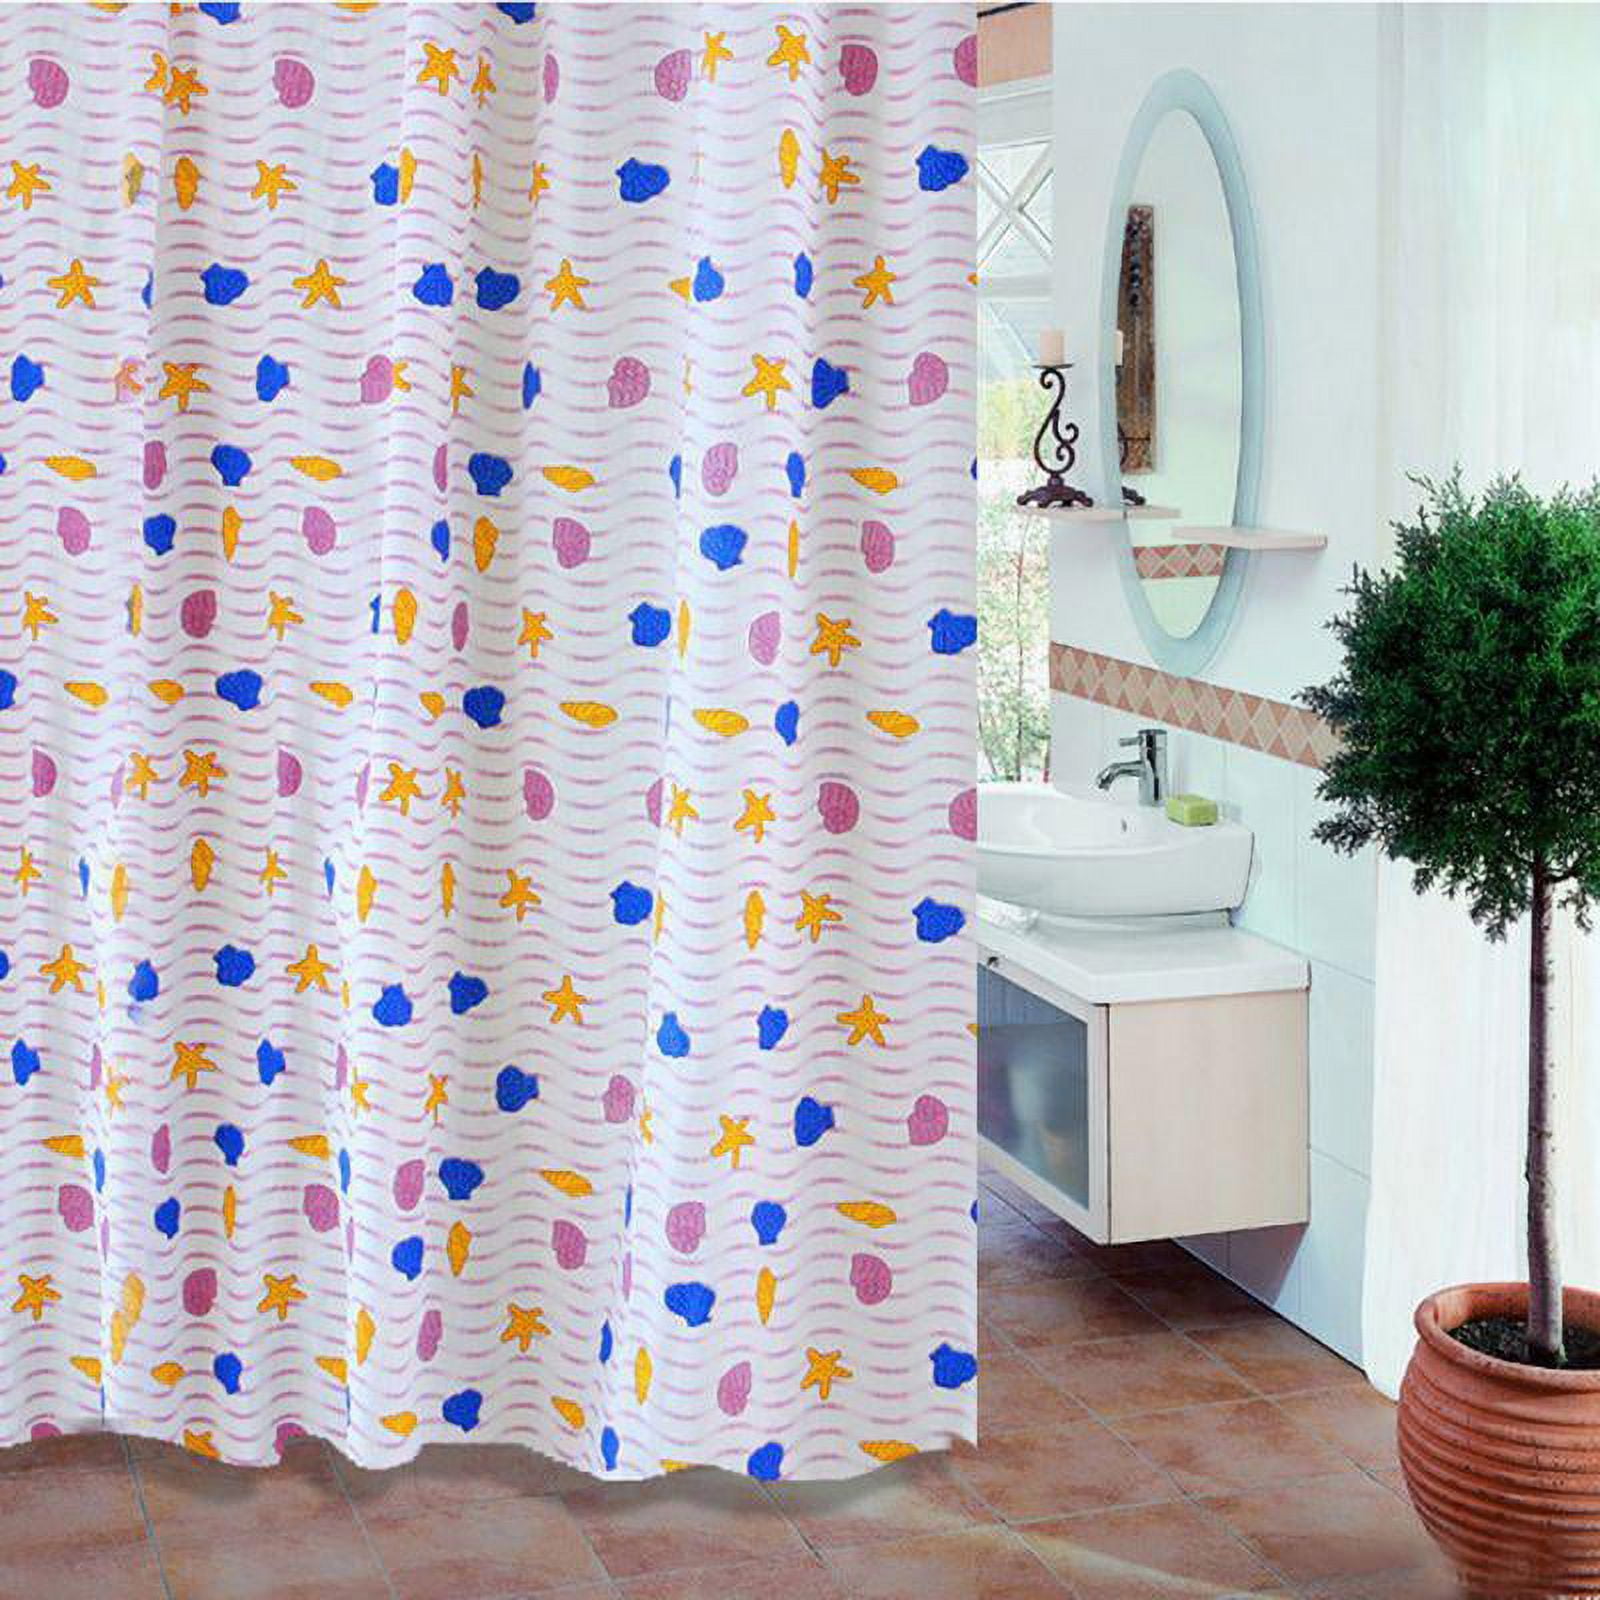 Altsales Waterproof Sea Shell Shower Curtain Bath Curtain Decor Bathroom  Set + 12 Hooks Rings Home Decor,71 x 71 inch 